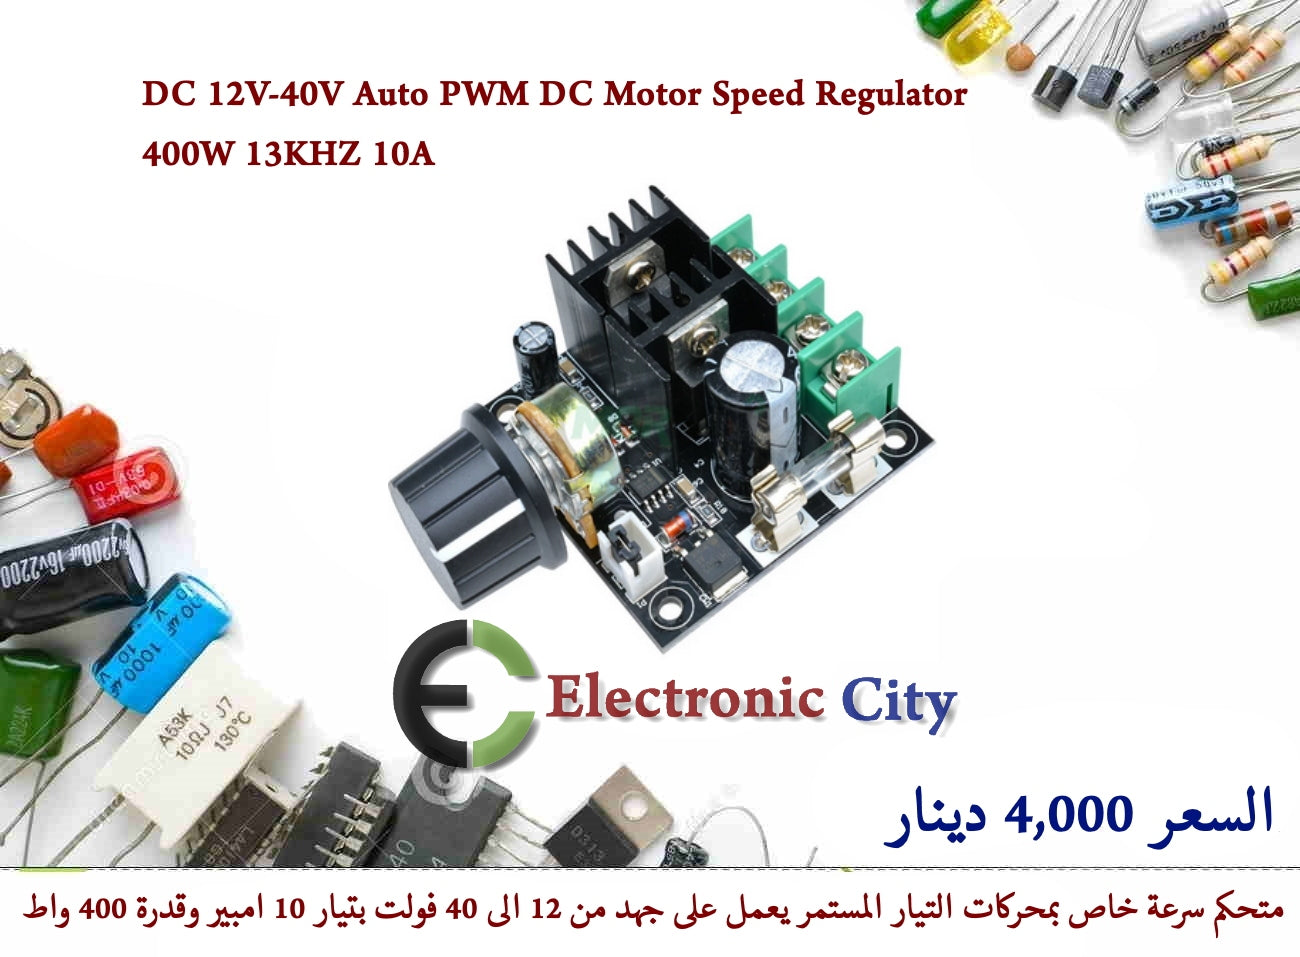 DC 12V-40V Auto PWM DC Motor Speed Regulator 400W 13KHZ 10A